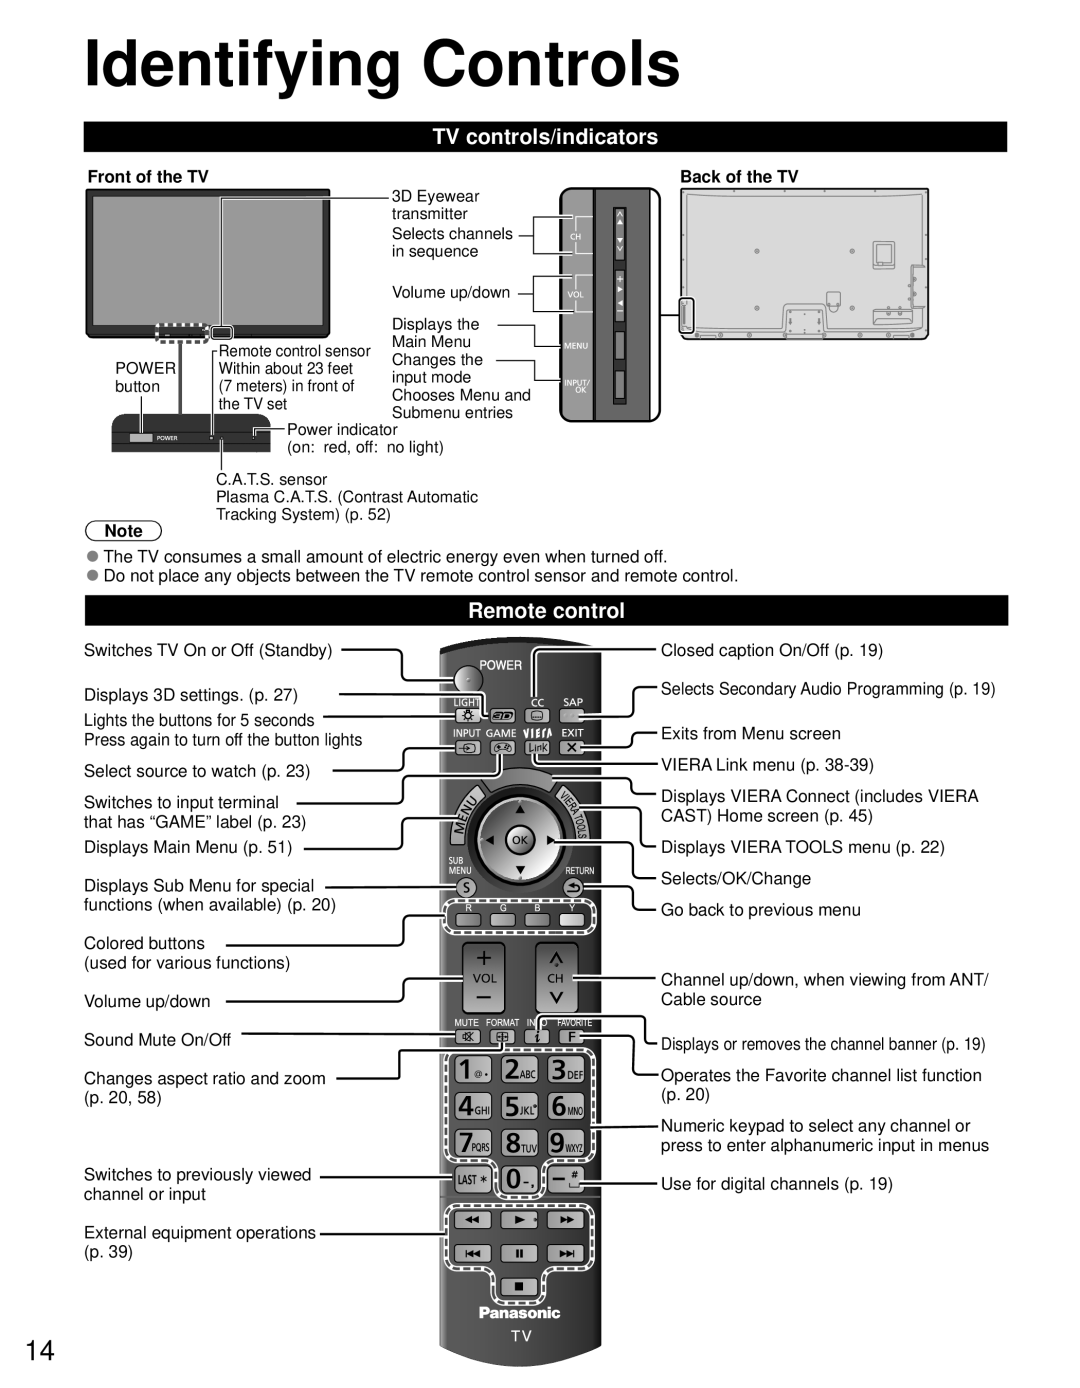 Panasonic TC-P55GT31 owner manual Identifying Controls, TV controls/indicators, Remote control 